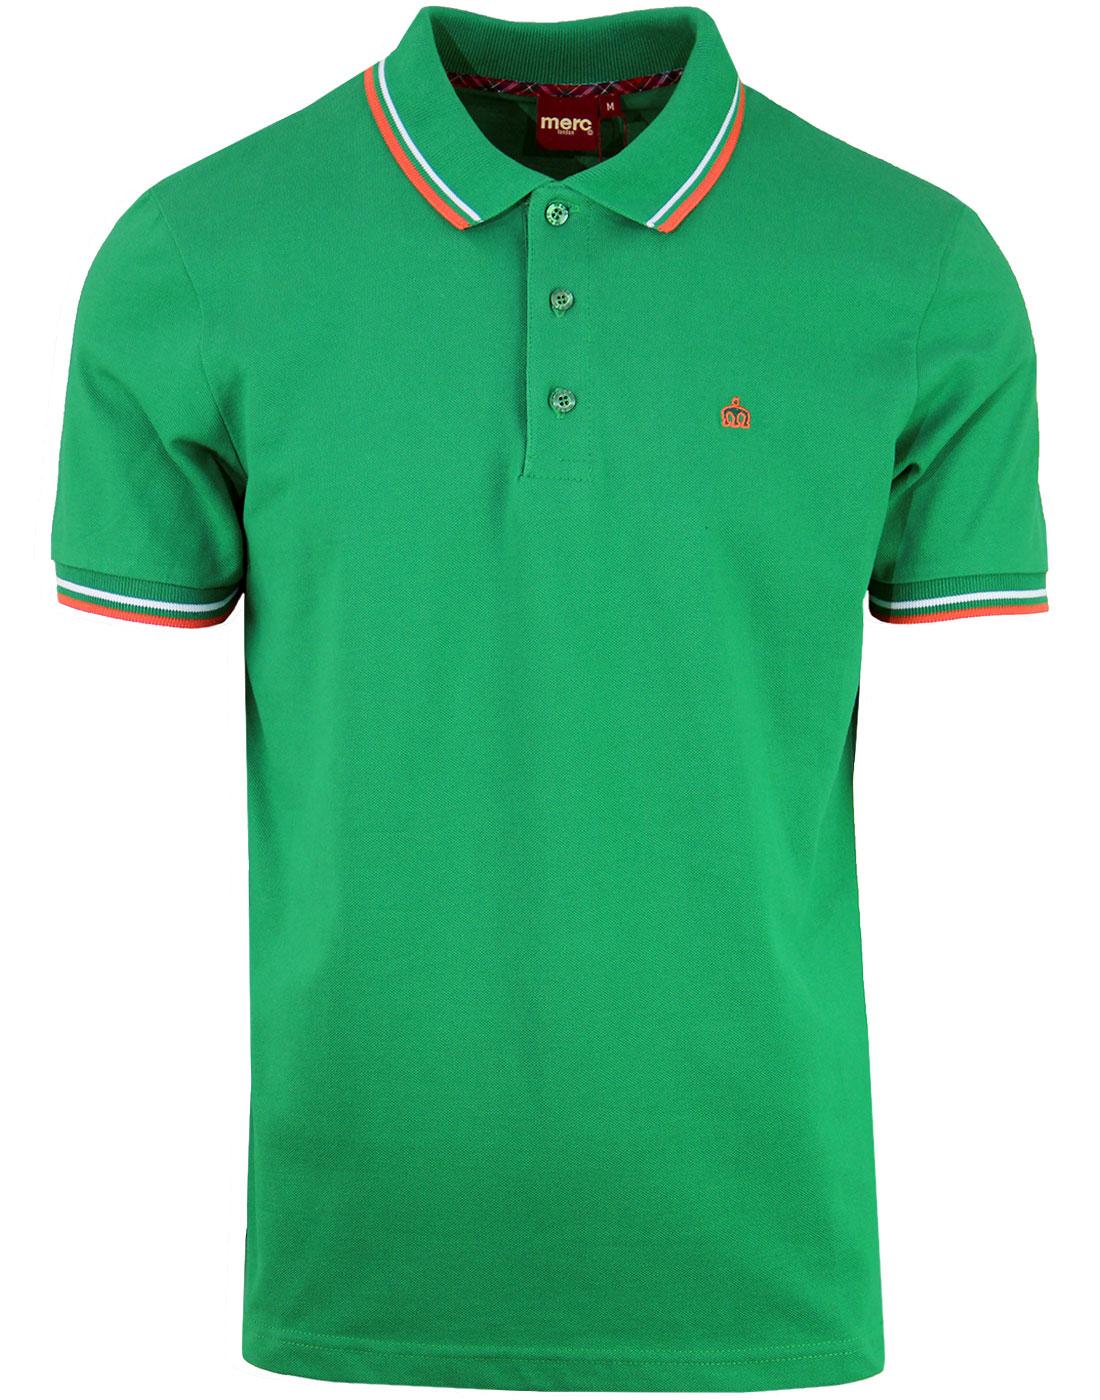 Card MERC Mod Retro Tipped Pique Polo Shirt in Bright Green